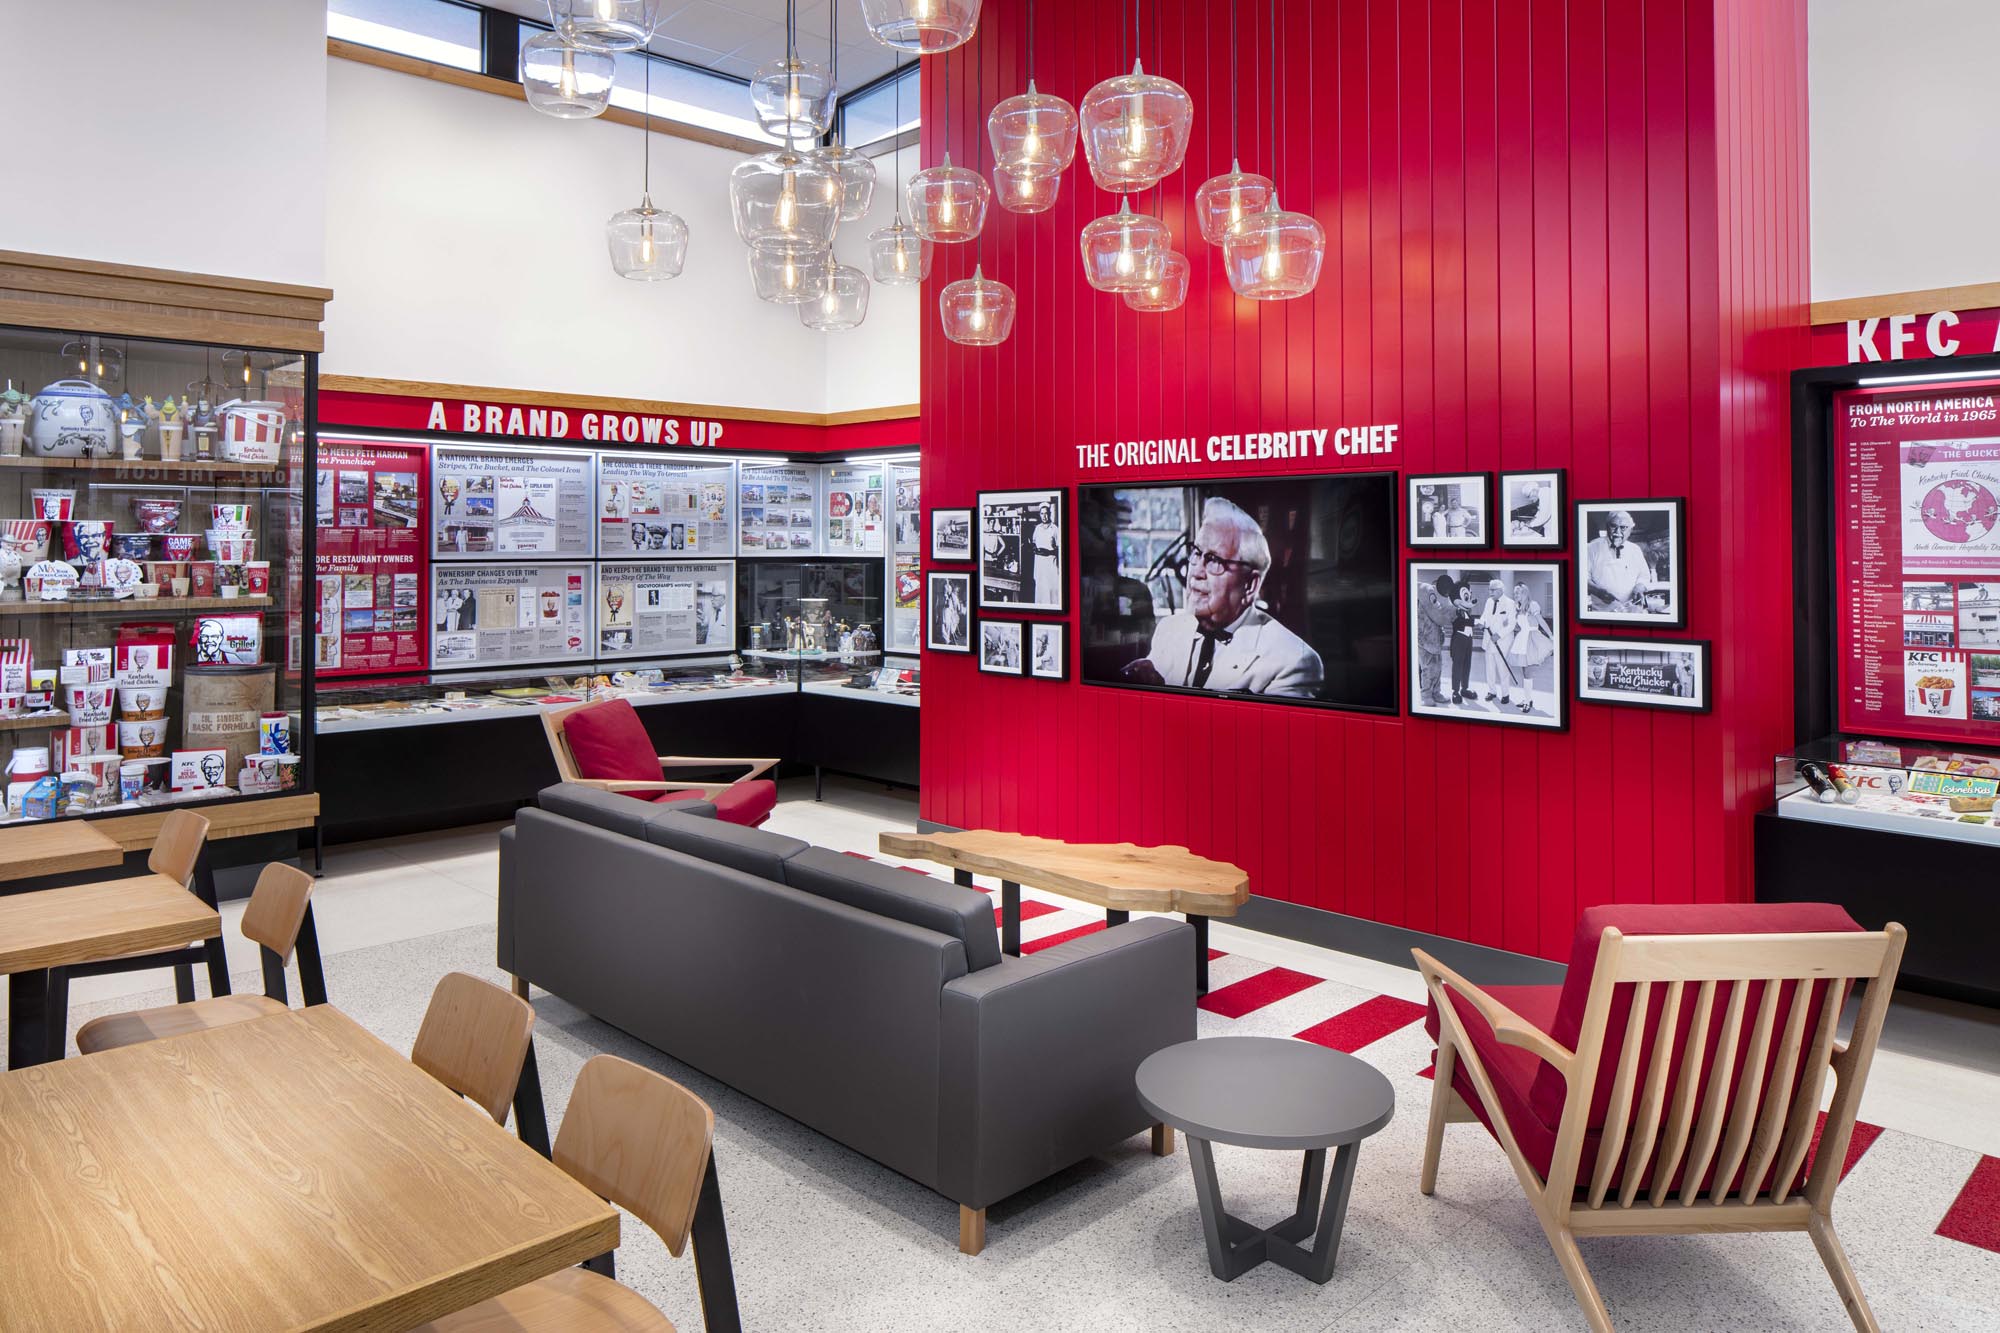 Retail & Restaurant Facility Business: NELSON reimagines original KFC location and museum